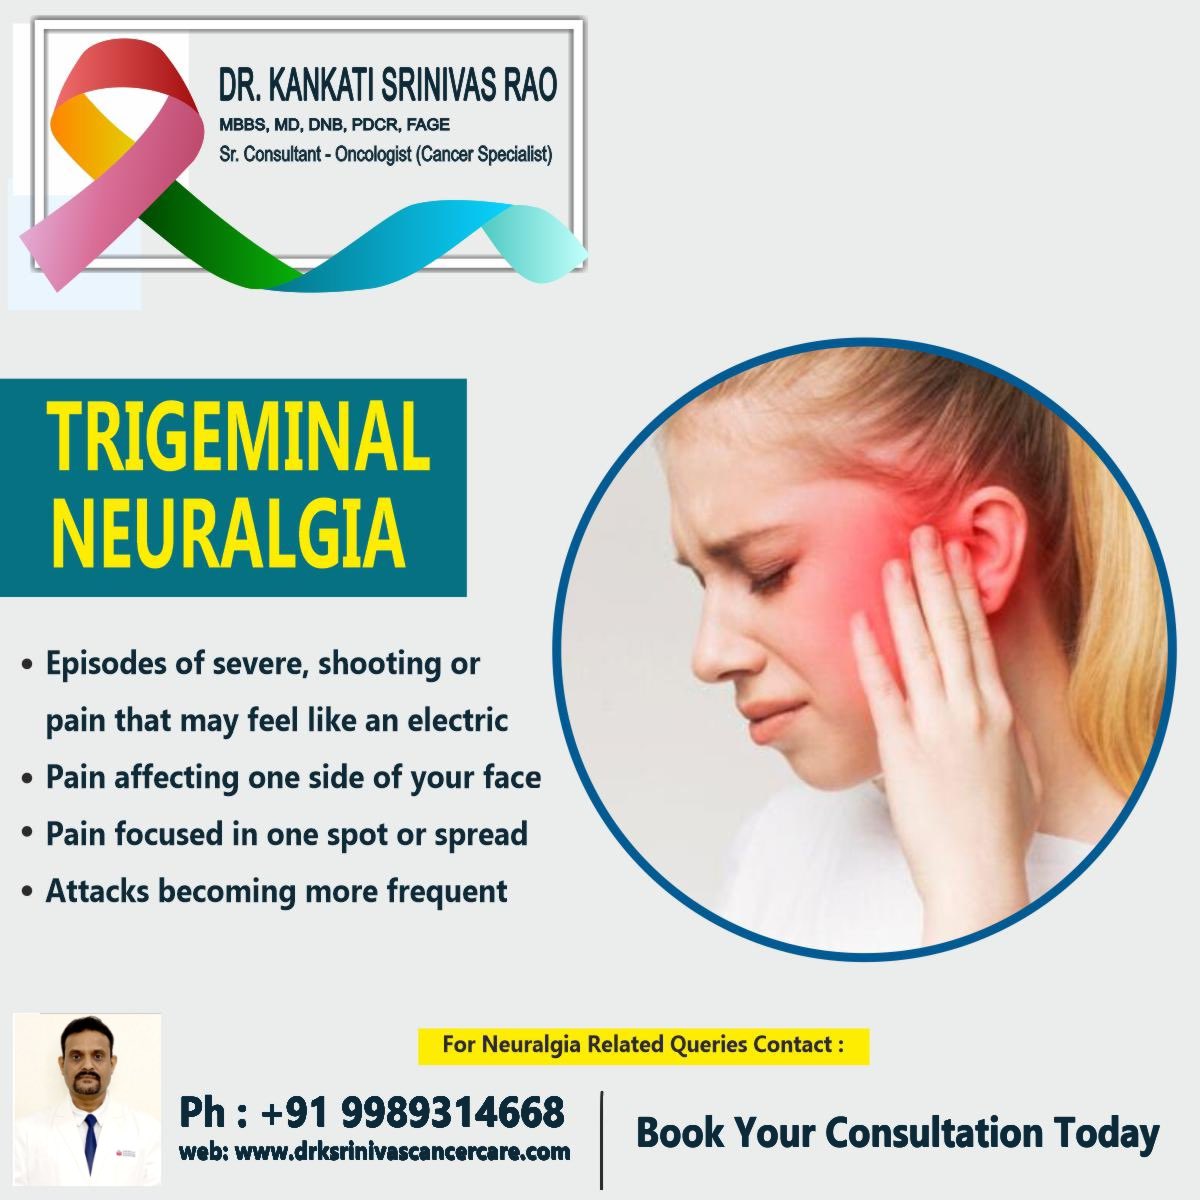 Trigeminal neuralgia Consult the best & senior oncologist Dr. Kankati Srinivas Rao in Hyderabad for the best trigeminal neuralgia Treatment. #drsrinivasrao #symptoms #trigeminalneuralgia #pain #hyderabad #BestCancerSpecialist #radiationoncology #telangana #radiotherapy